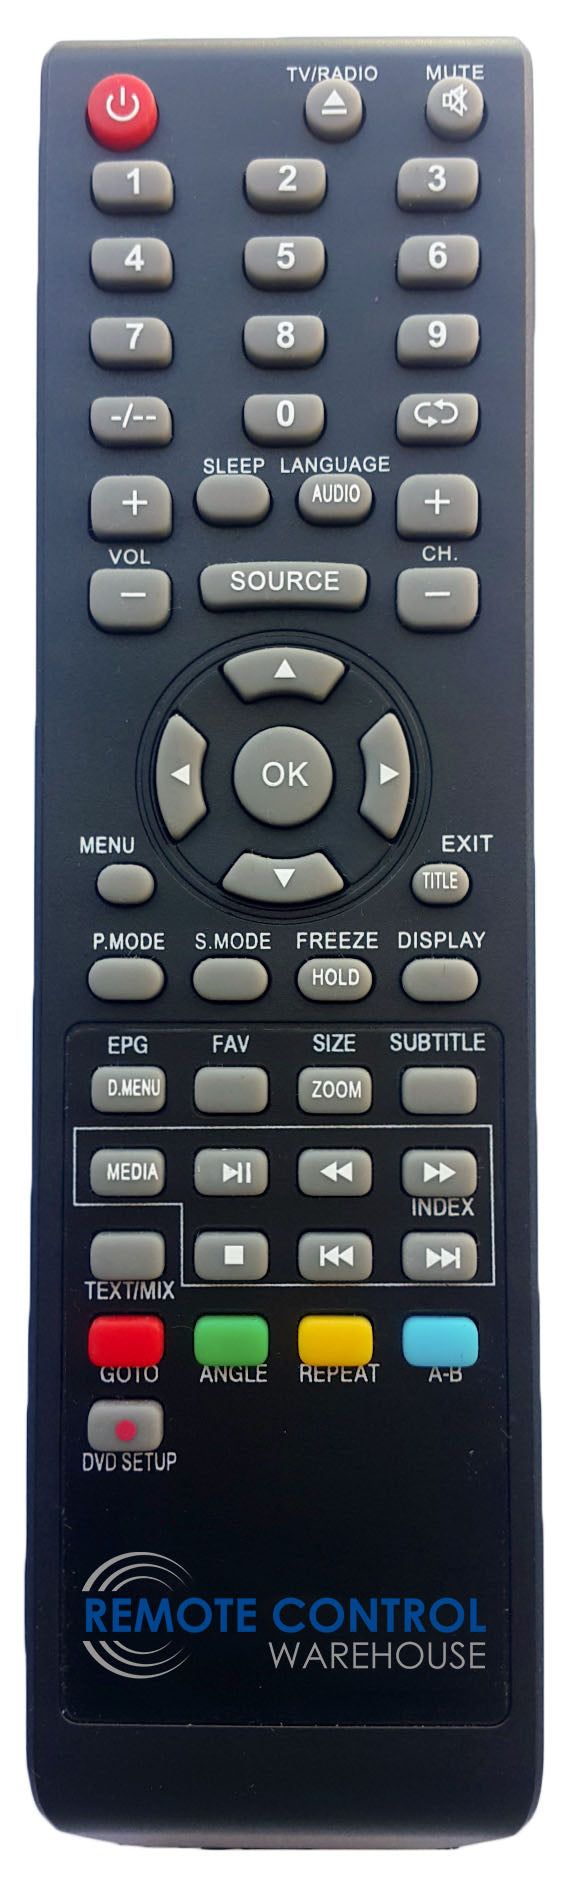 AKAI REPLACEMENT REMOTE CONTROL - AK-VJ55FHD15 AKVJ55FHD15 LED TV - Remote Control Warehouse